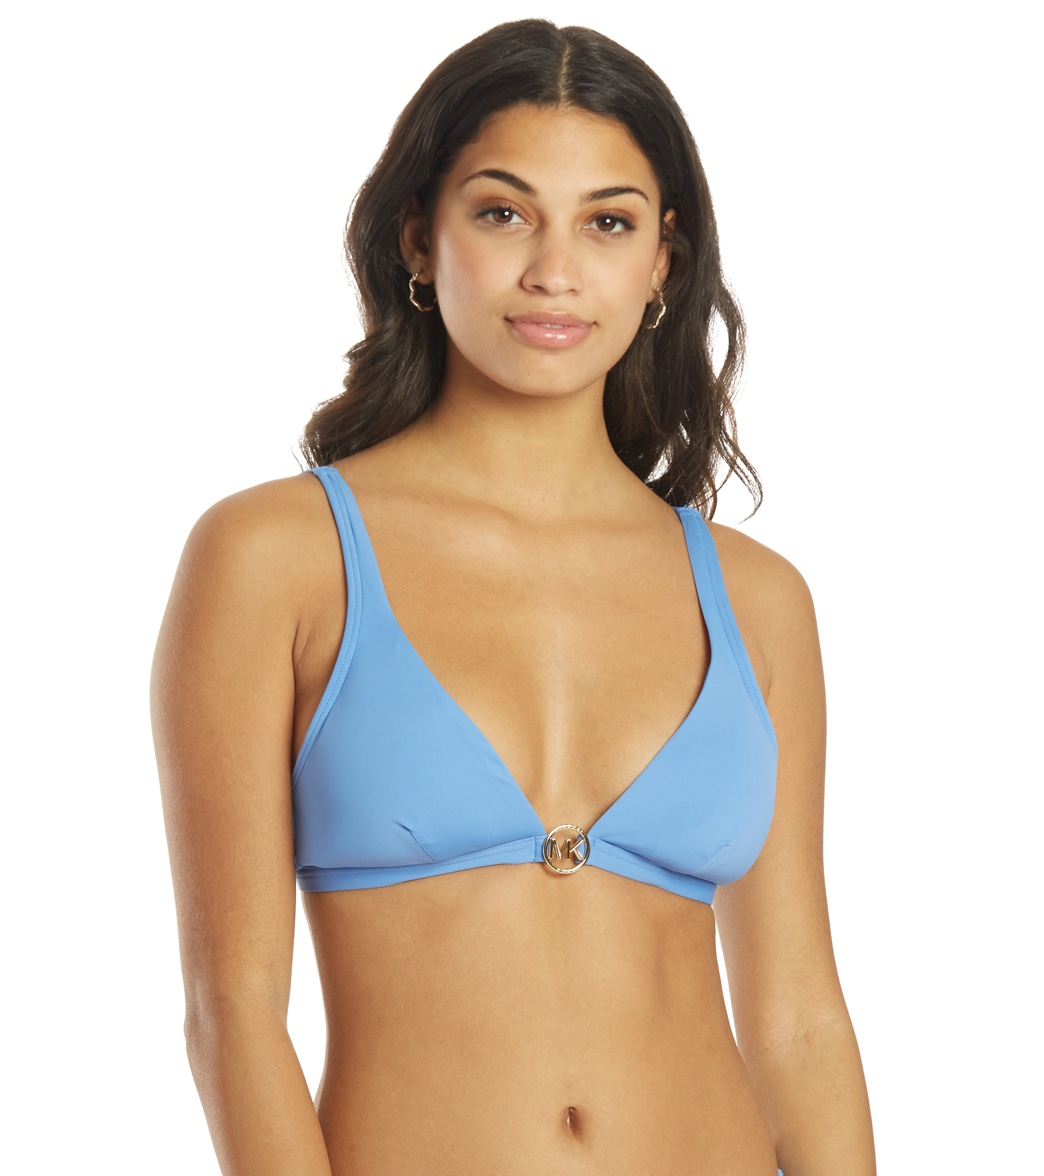 Michael Kors Women's Iconic Solid Cropped Bikini Top - Crew Blue Large - Swimoutlet.com